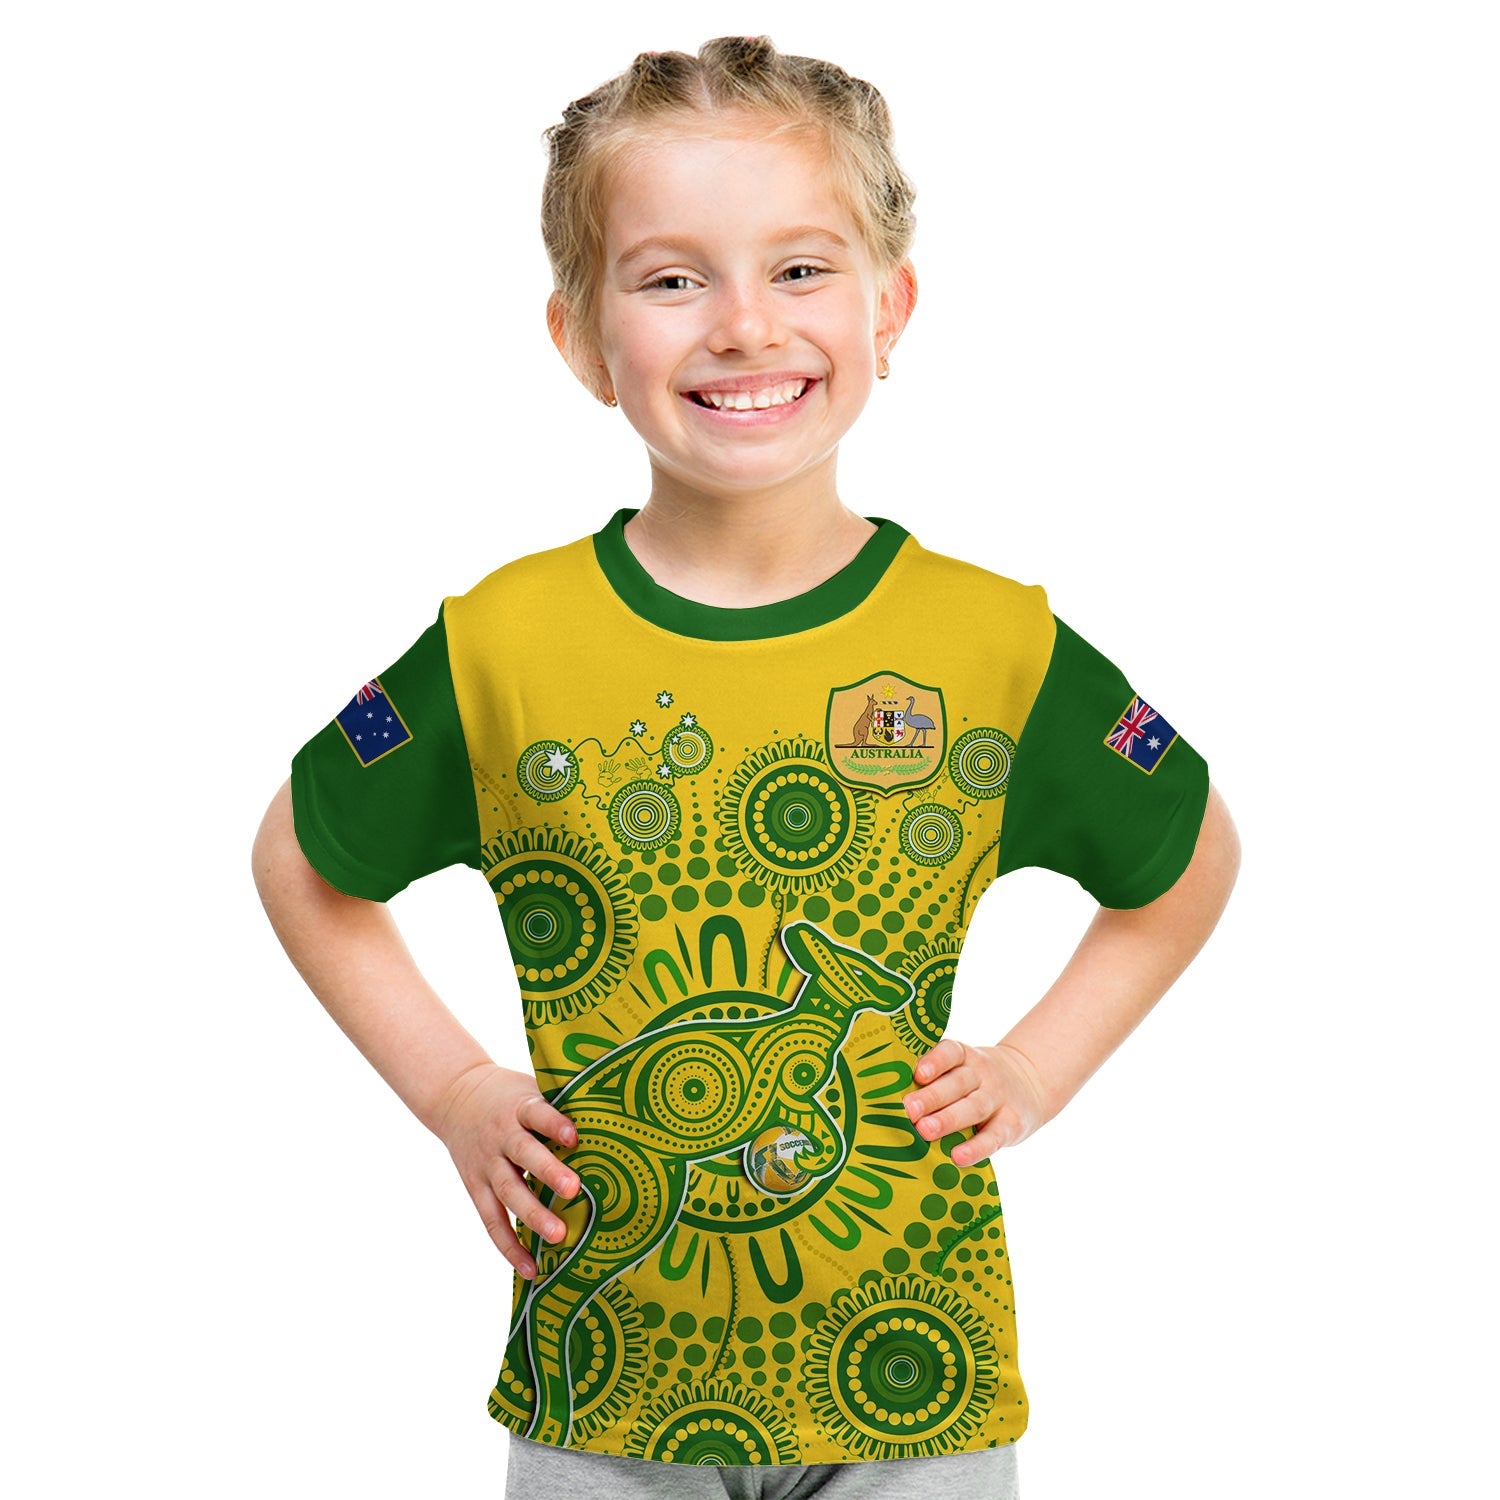 australia-soccer-t-shirt-socceroos-kangaroo-aussie-indigenous-national-color